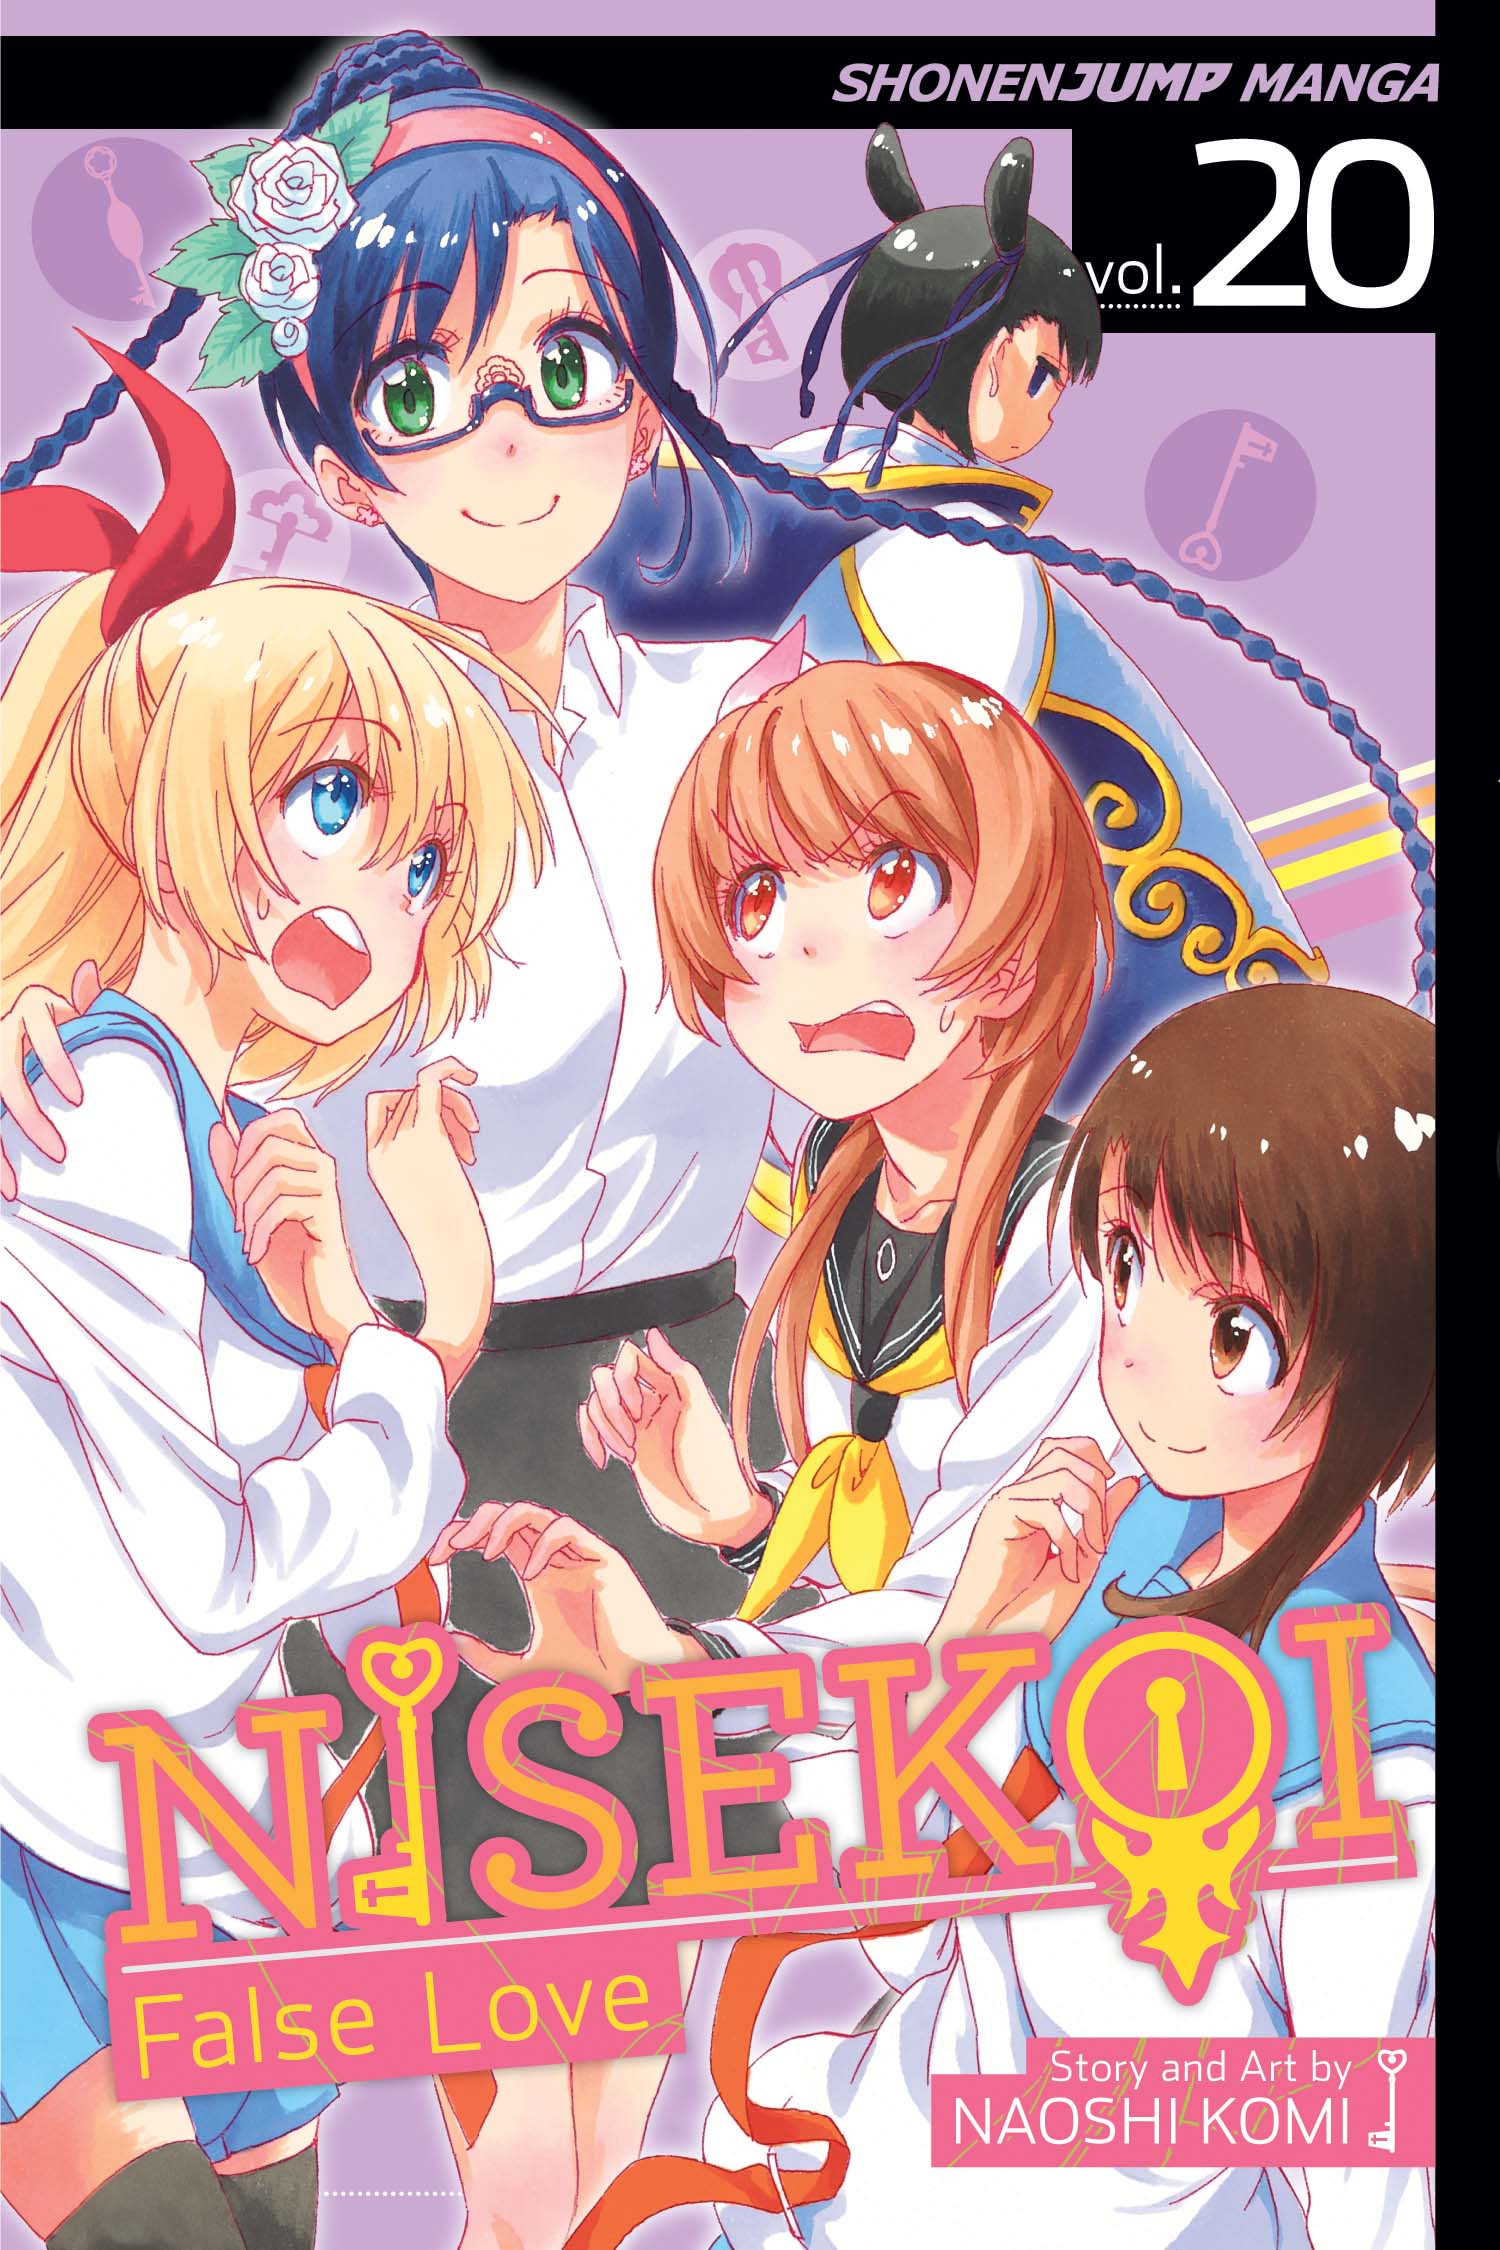 Nisekoi: False Love, Vol. 20 [Book]